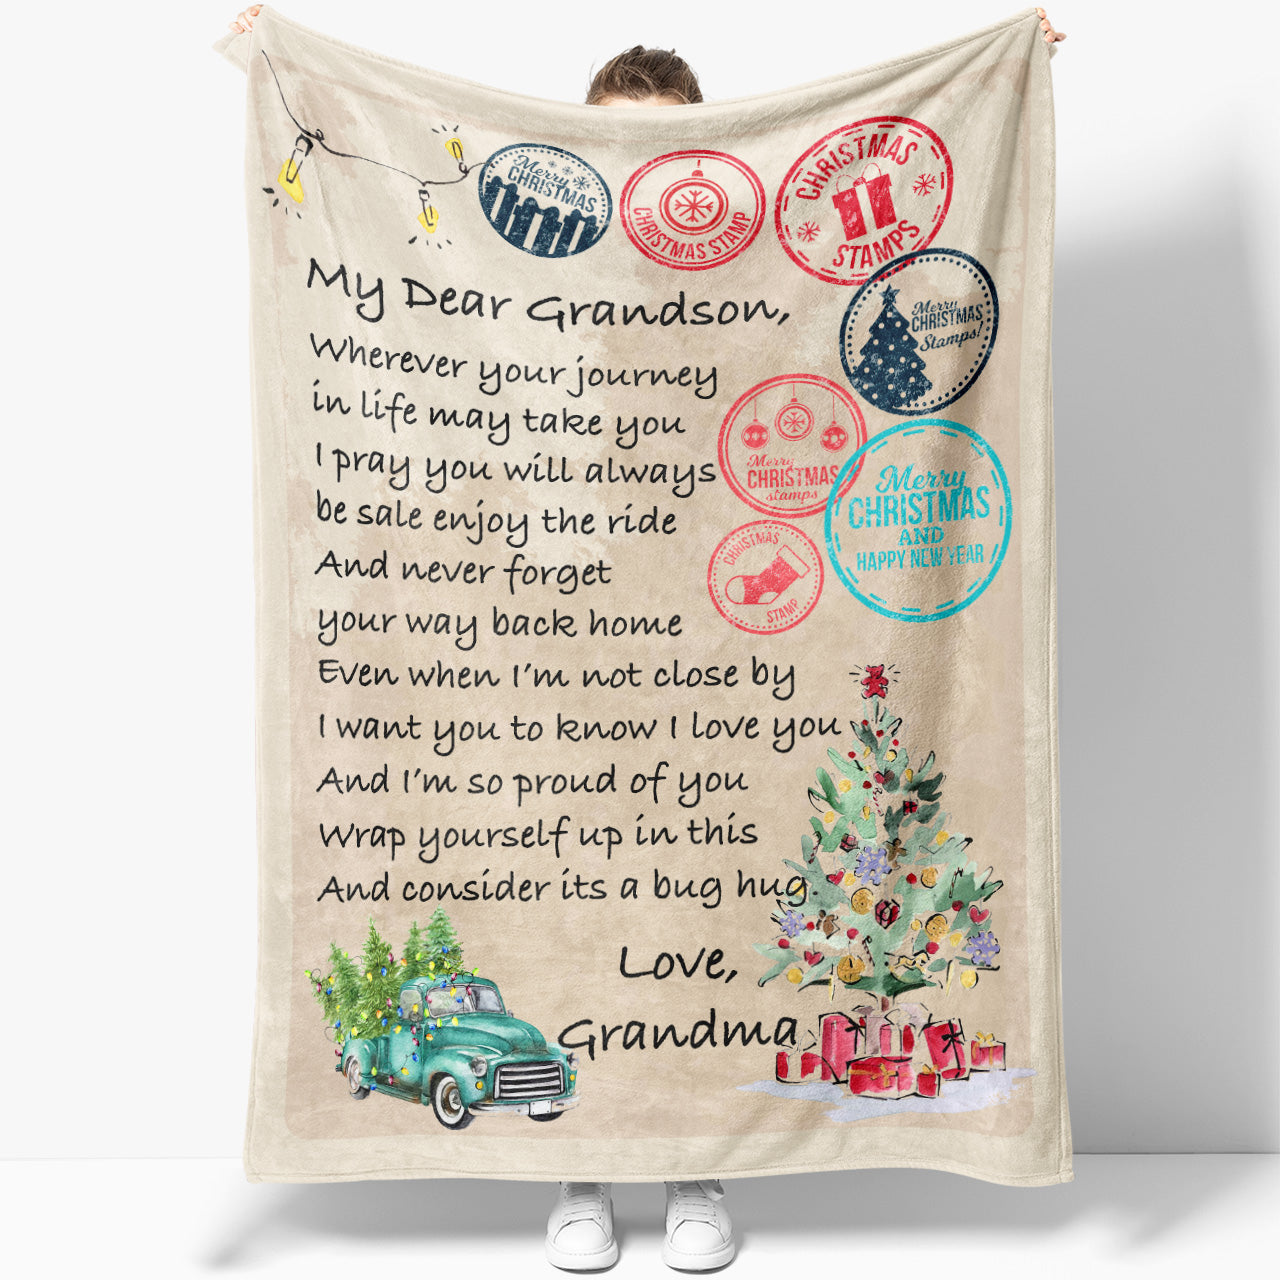 Blanket Christmas Gift For Grandson, Graduation Gifts For Grandson, Your Journey In Life